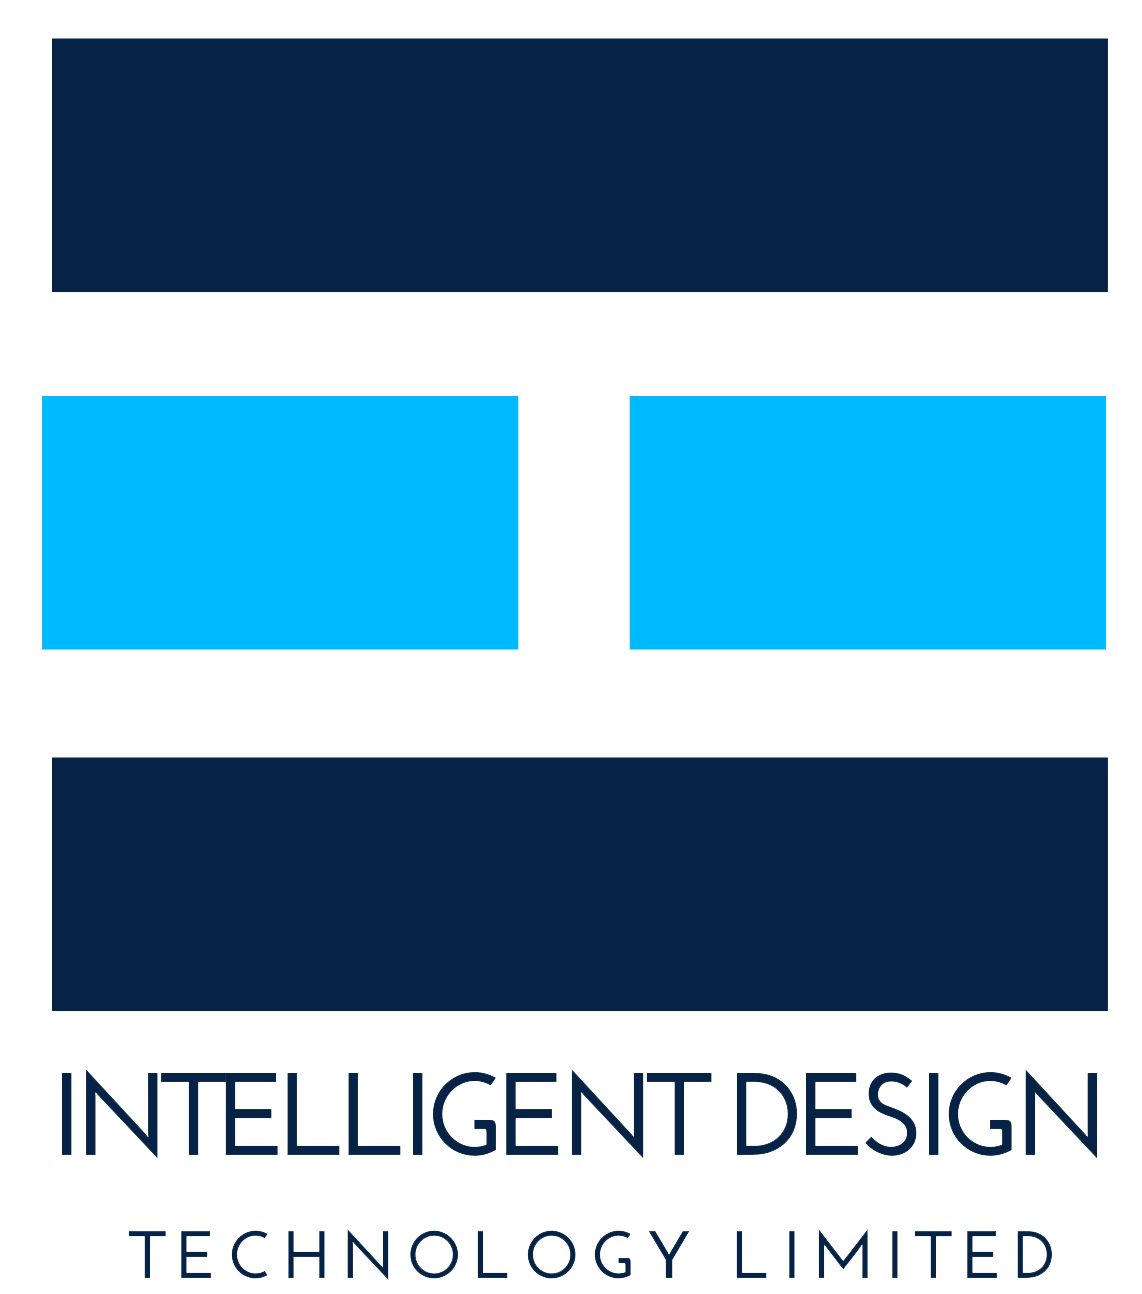 Intelligent Design Technology Limited